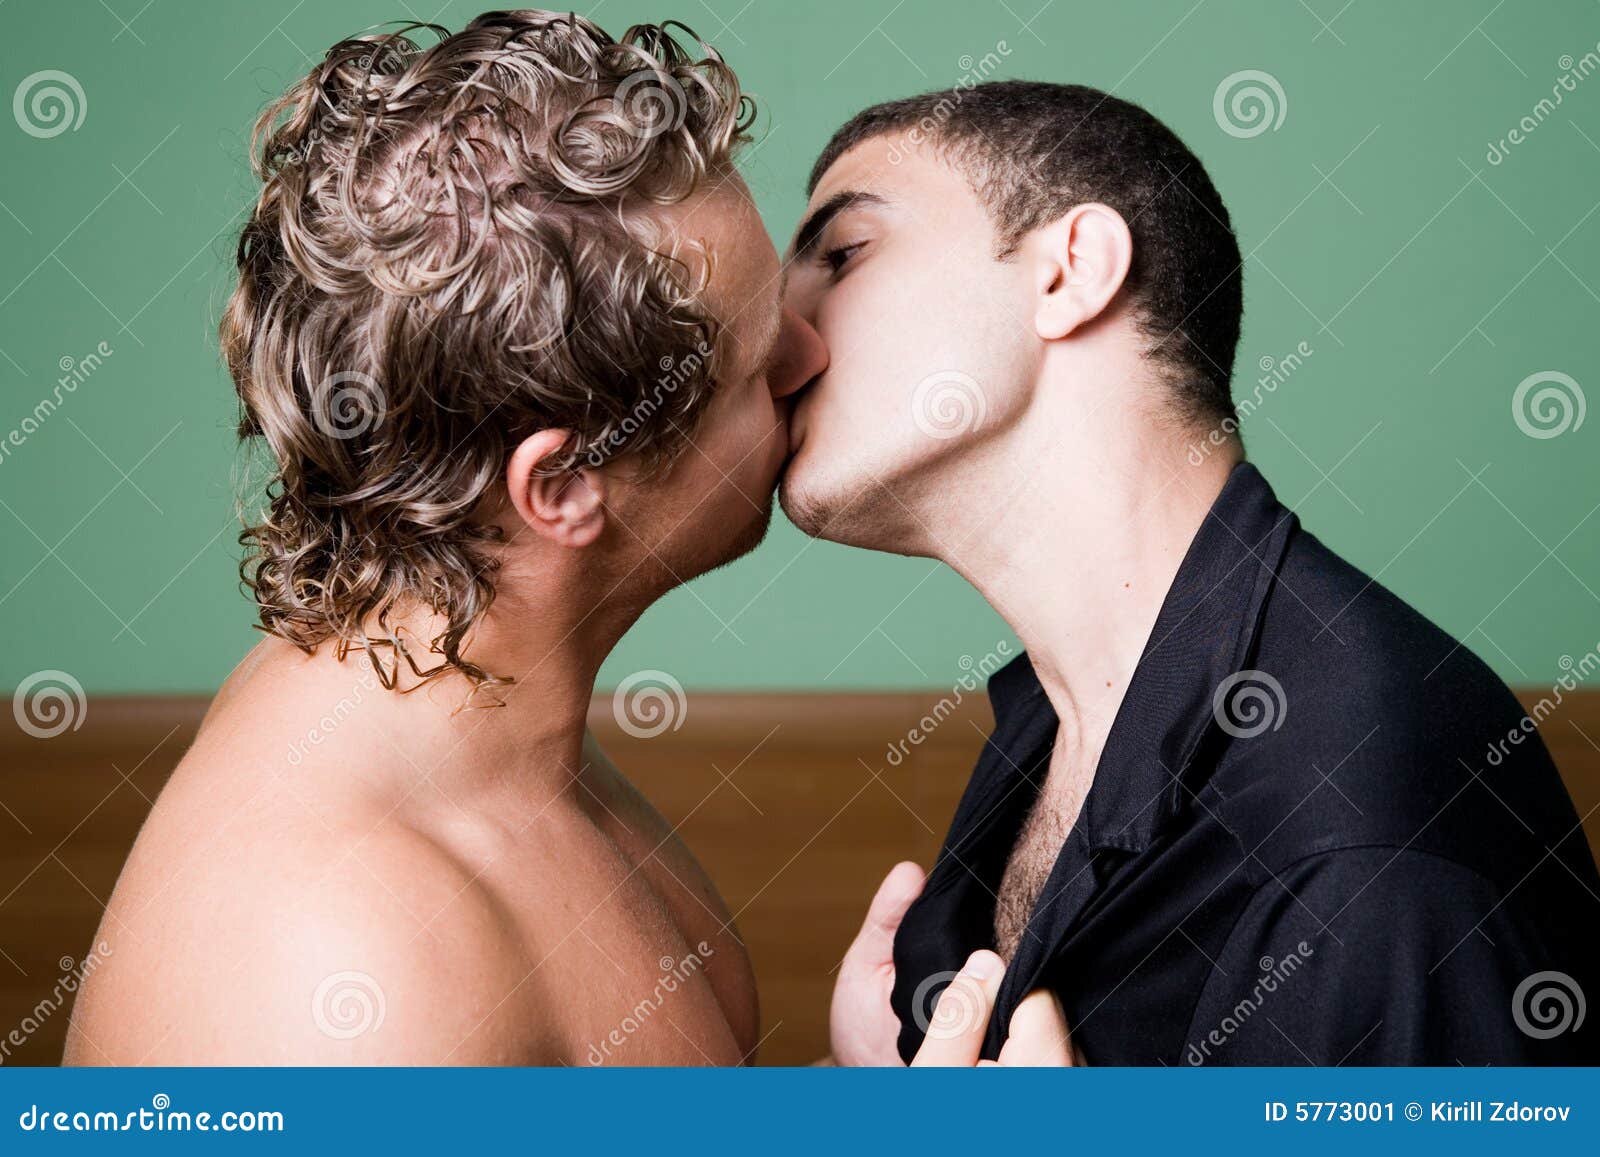 Men kissing boobies